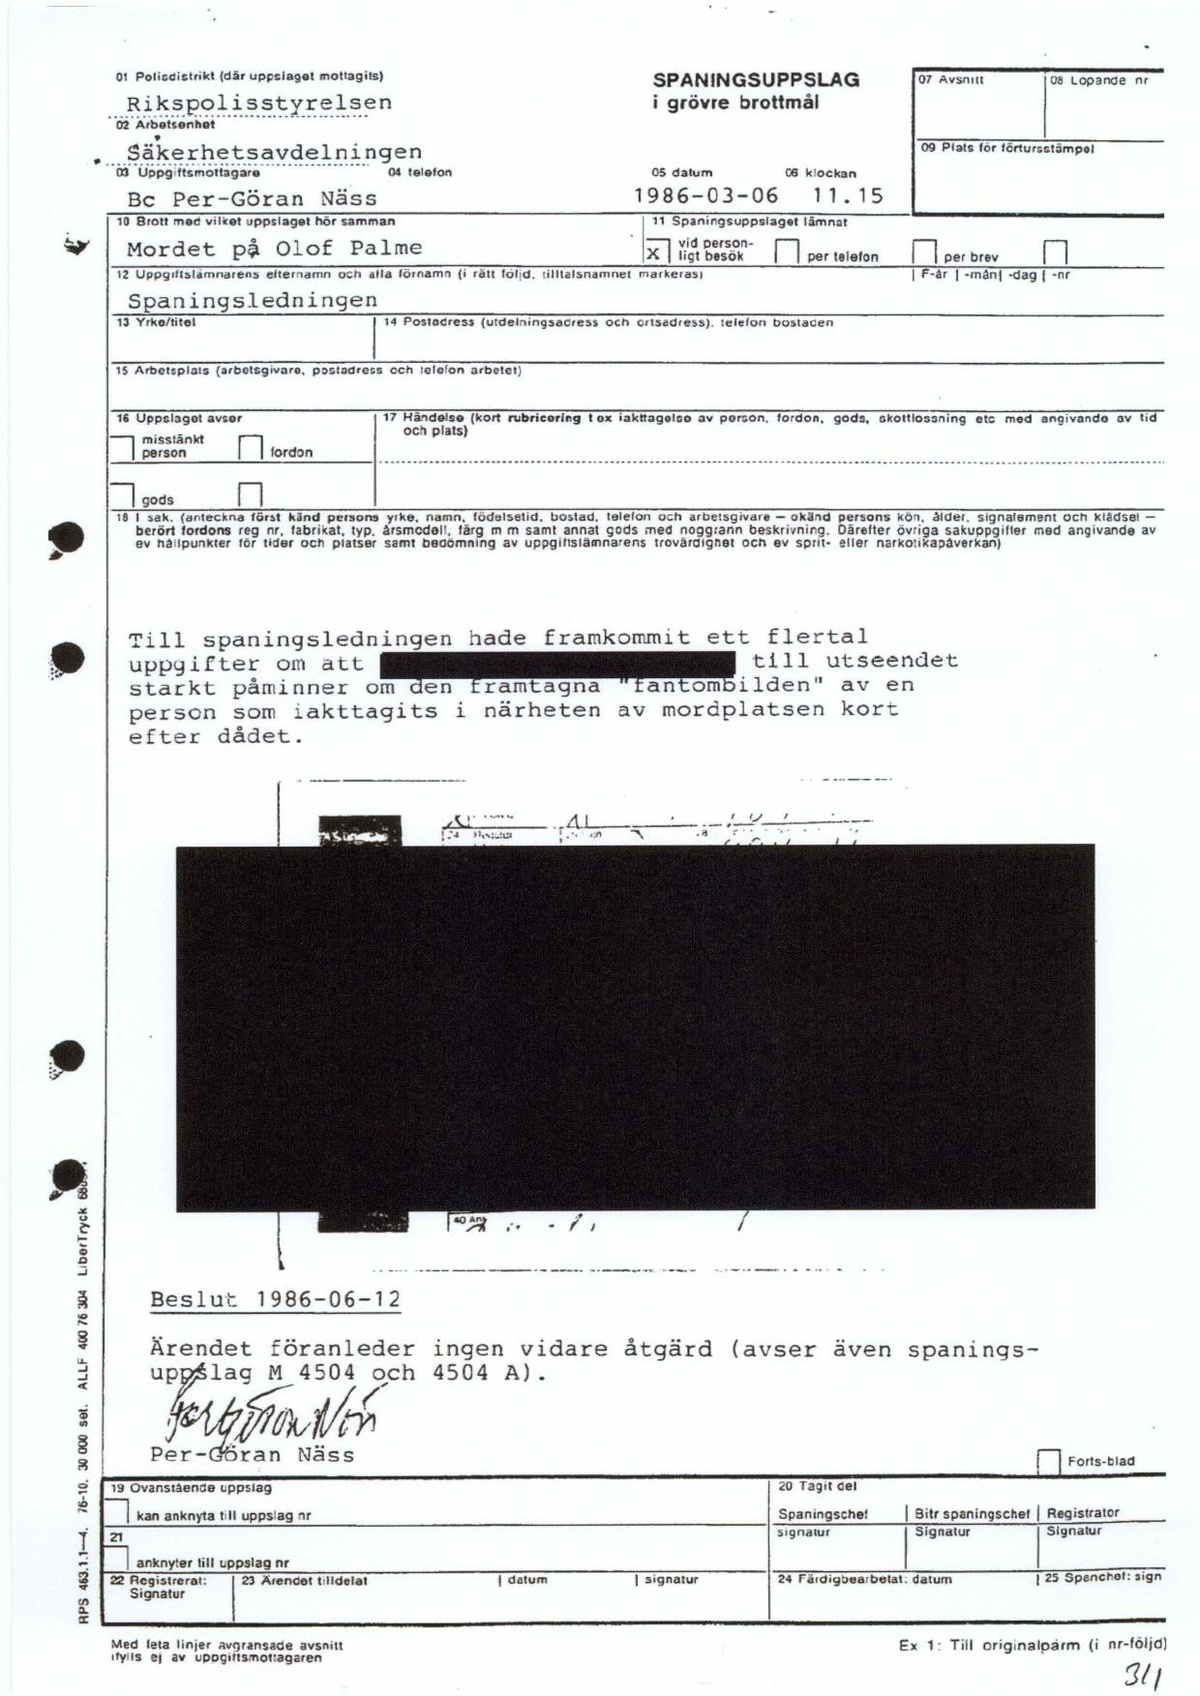 Pol-1986-03-06 1115 M4504-02 Kapten-anser-polis-liknar-fantombild.pdf